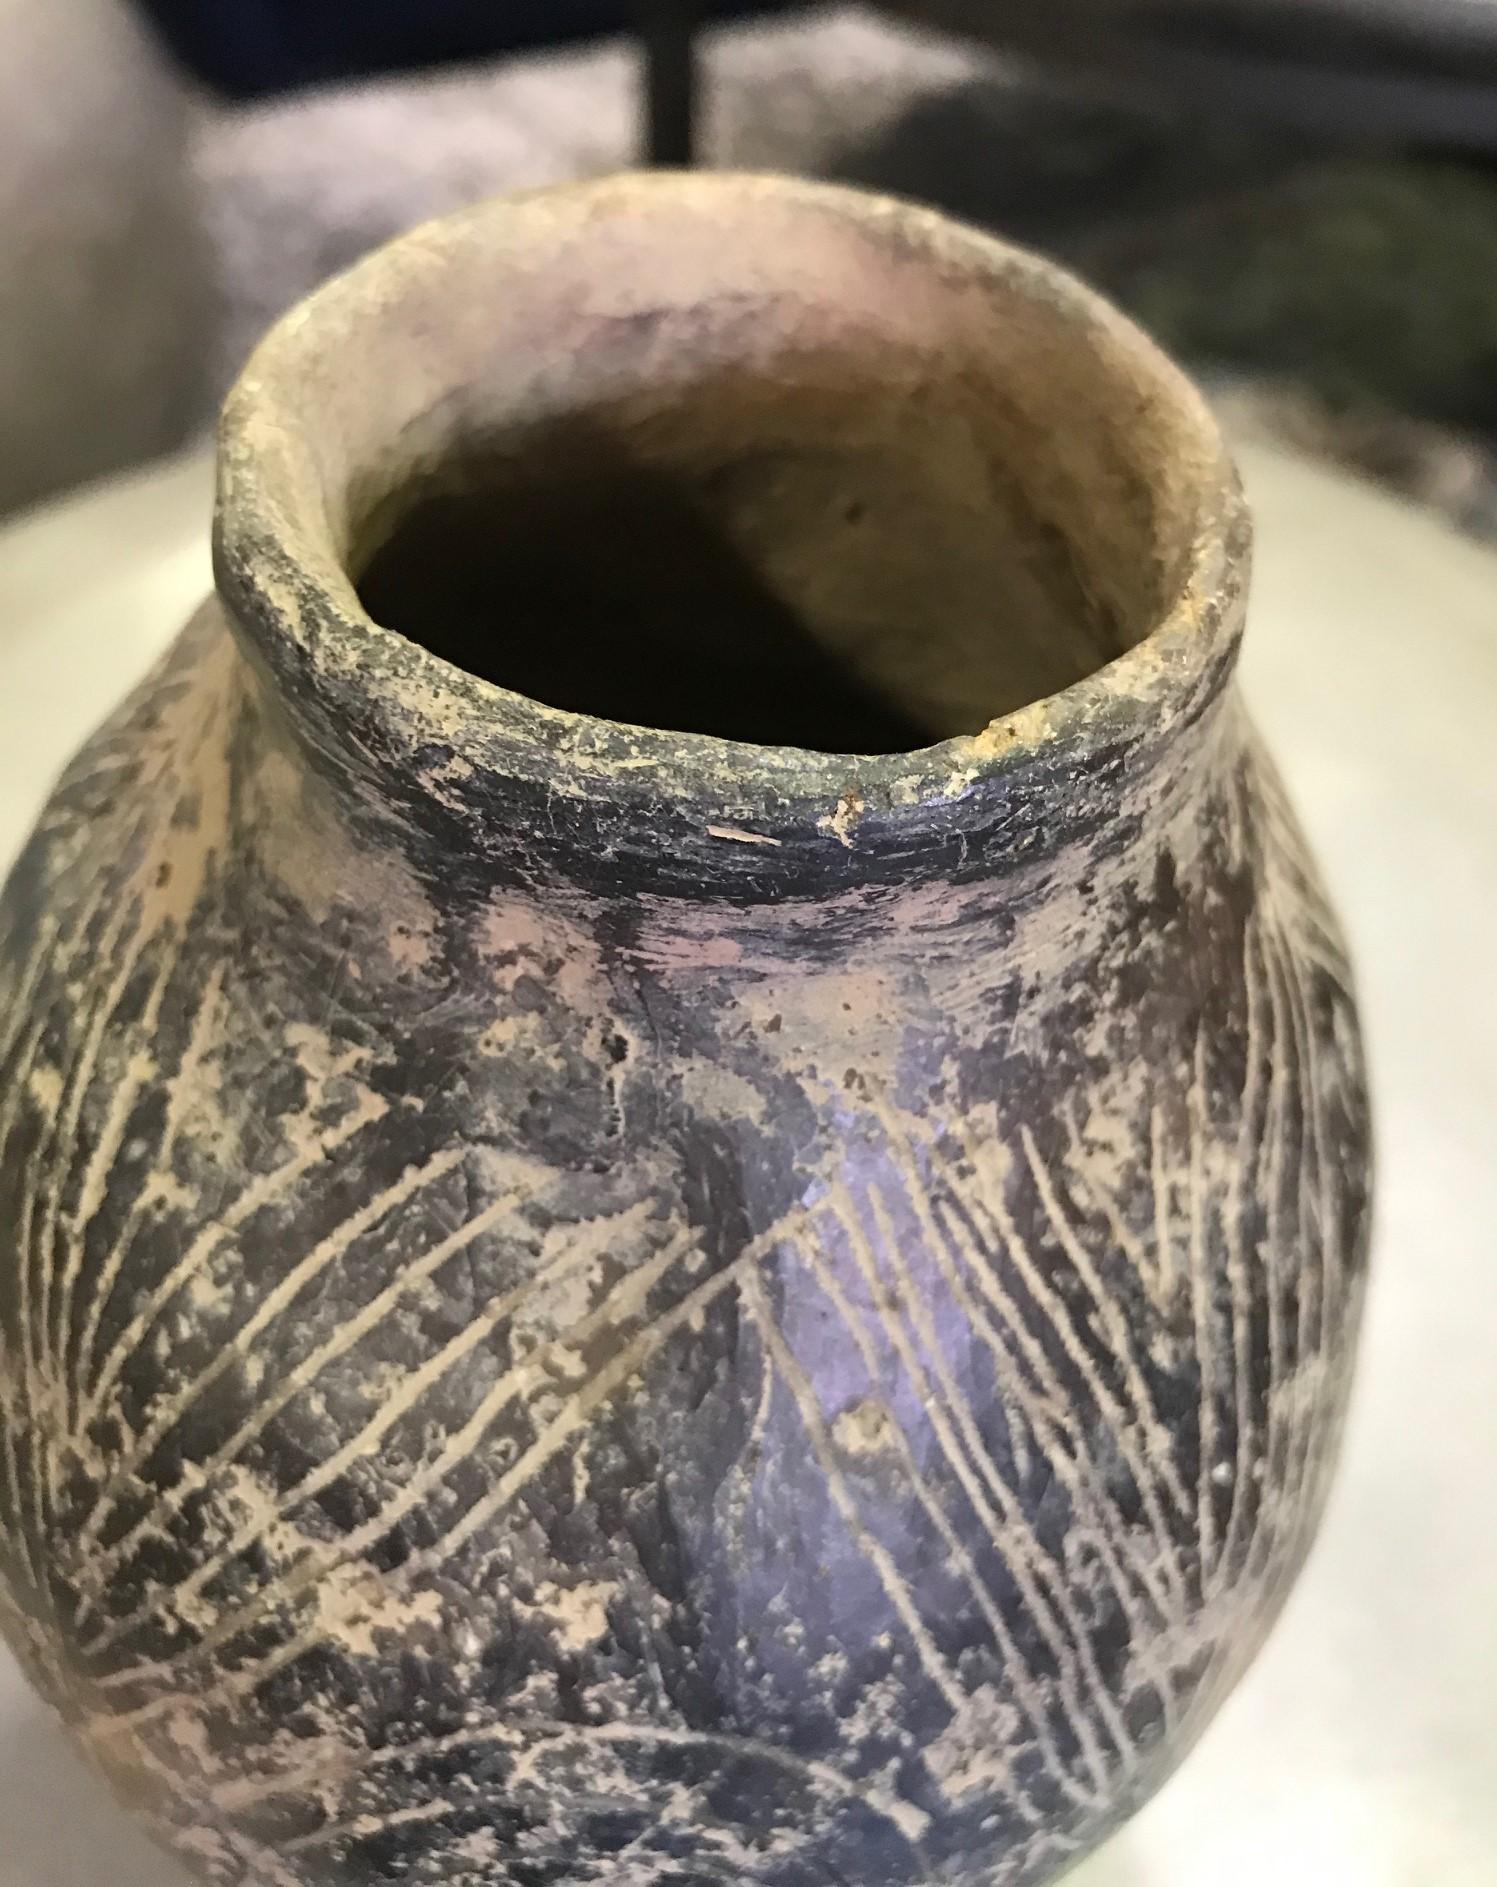 18th Century and Earlier Pre-Columbian Blackware Ceramic Pottery Three-Legged Vase Cup Vessel